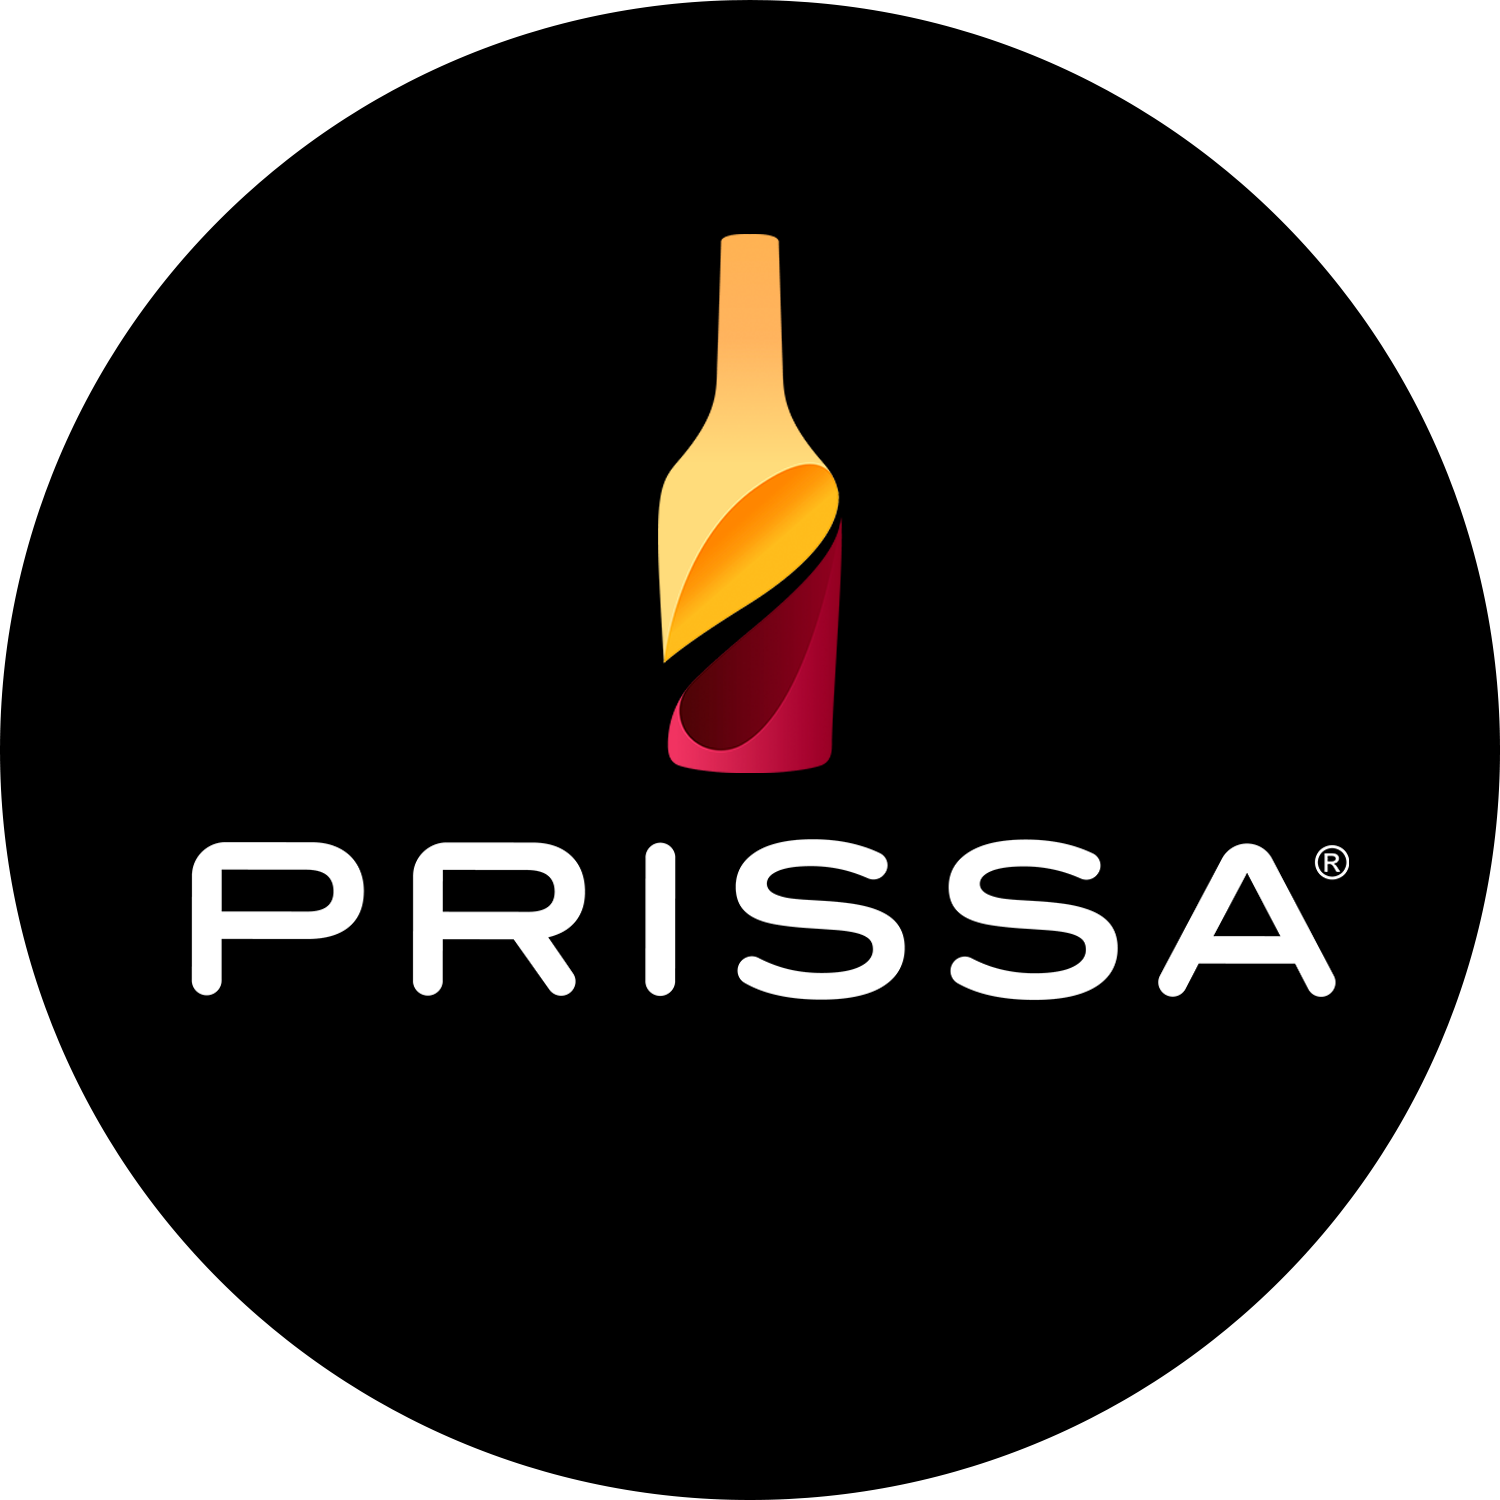 Prissa logo